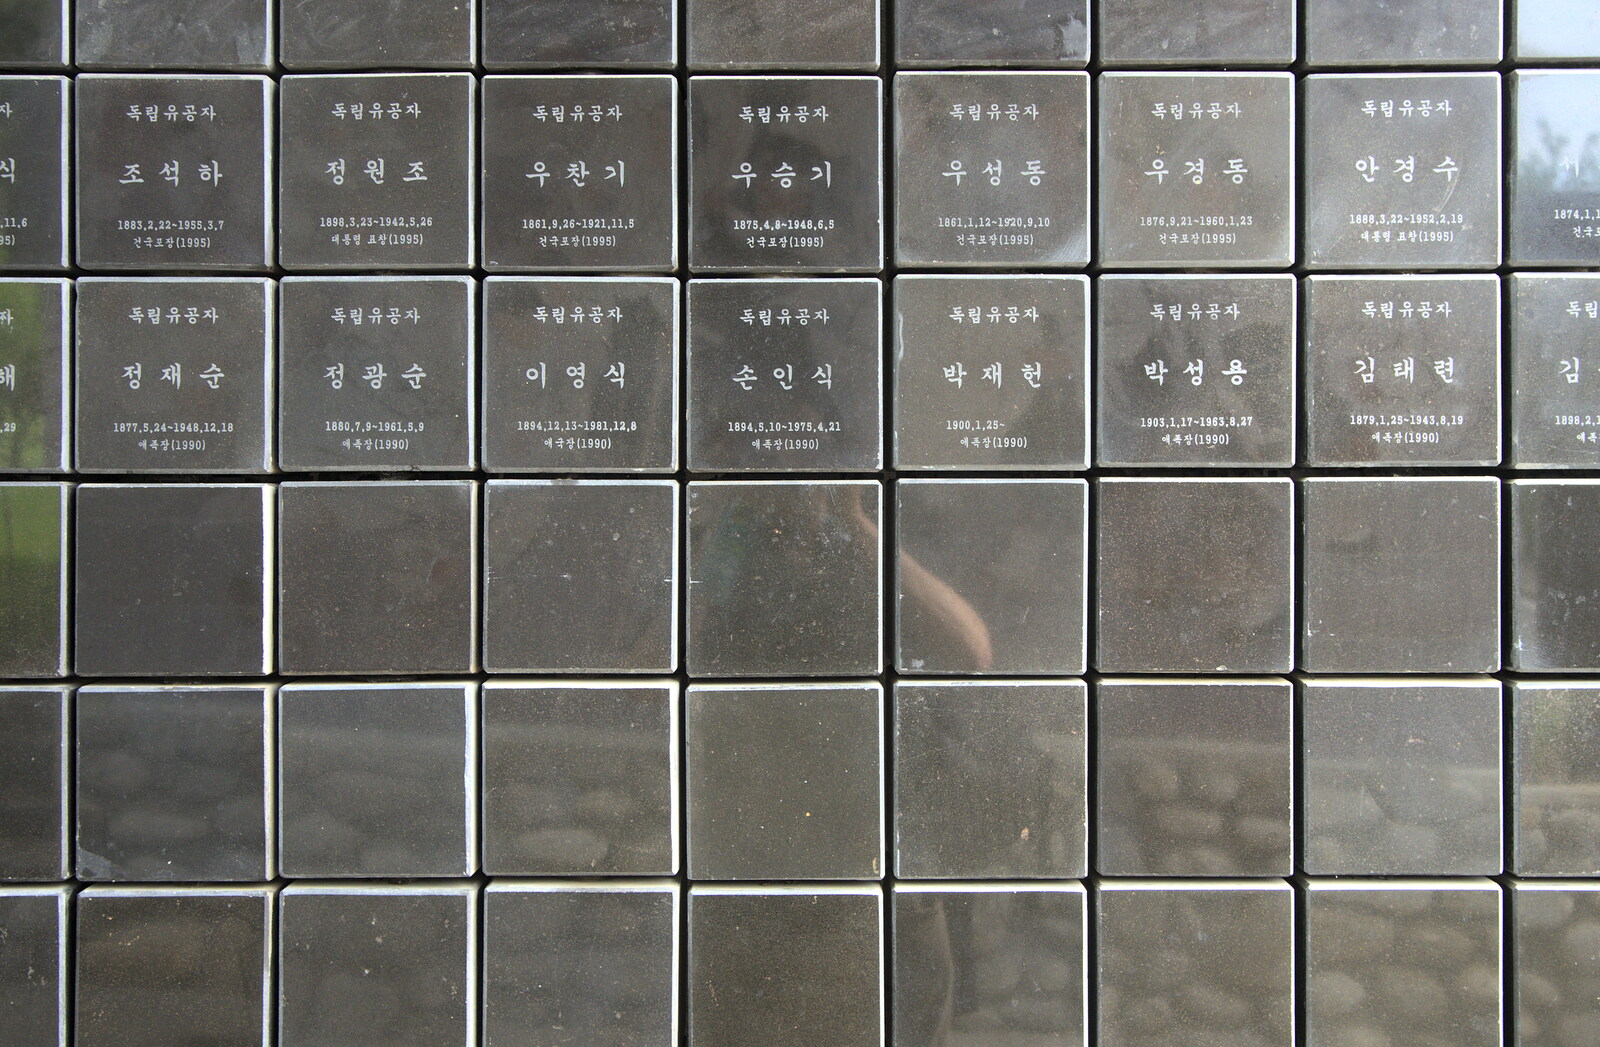 More tiles with stuff on from Seomun Market, Daegu, South Korea - 1st July 2012